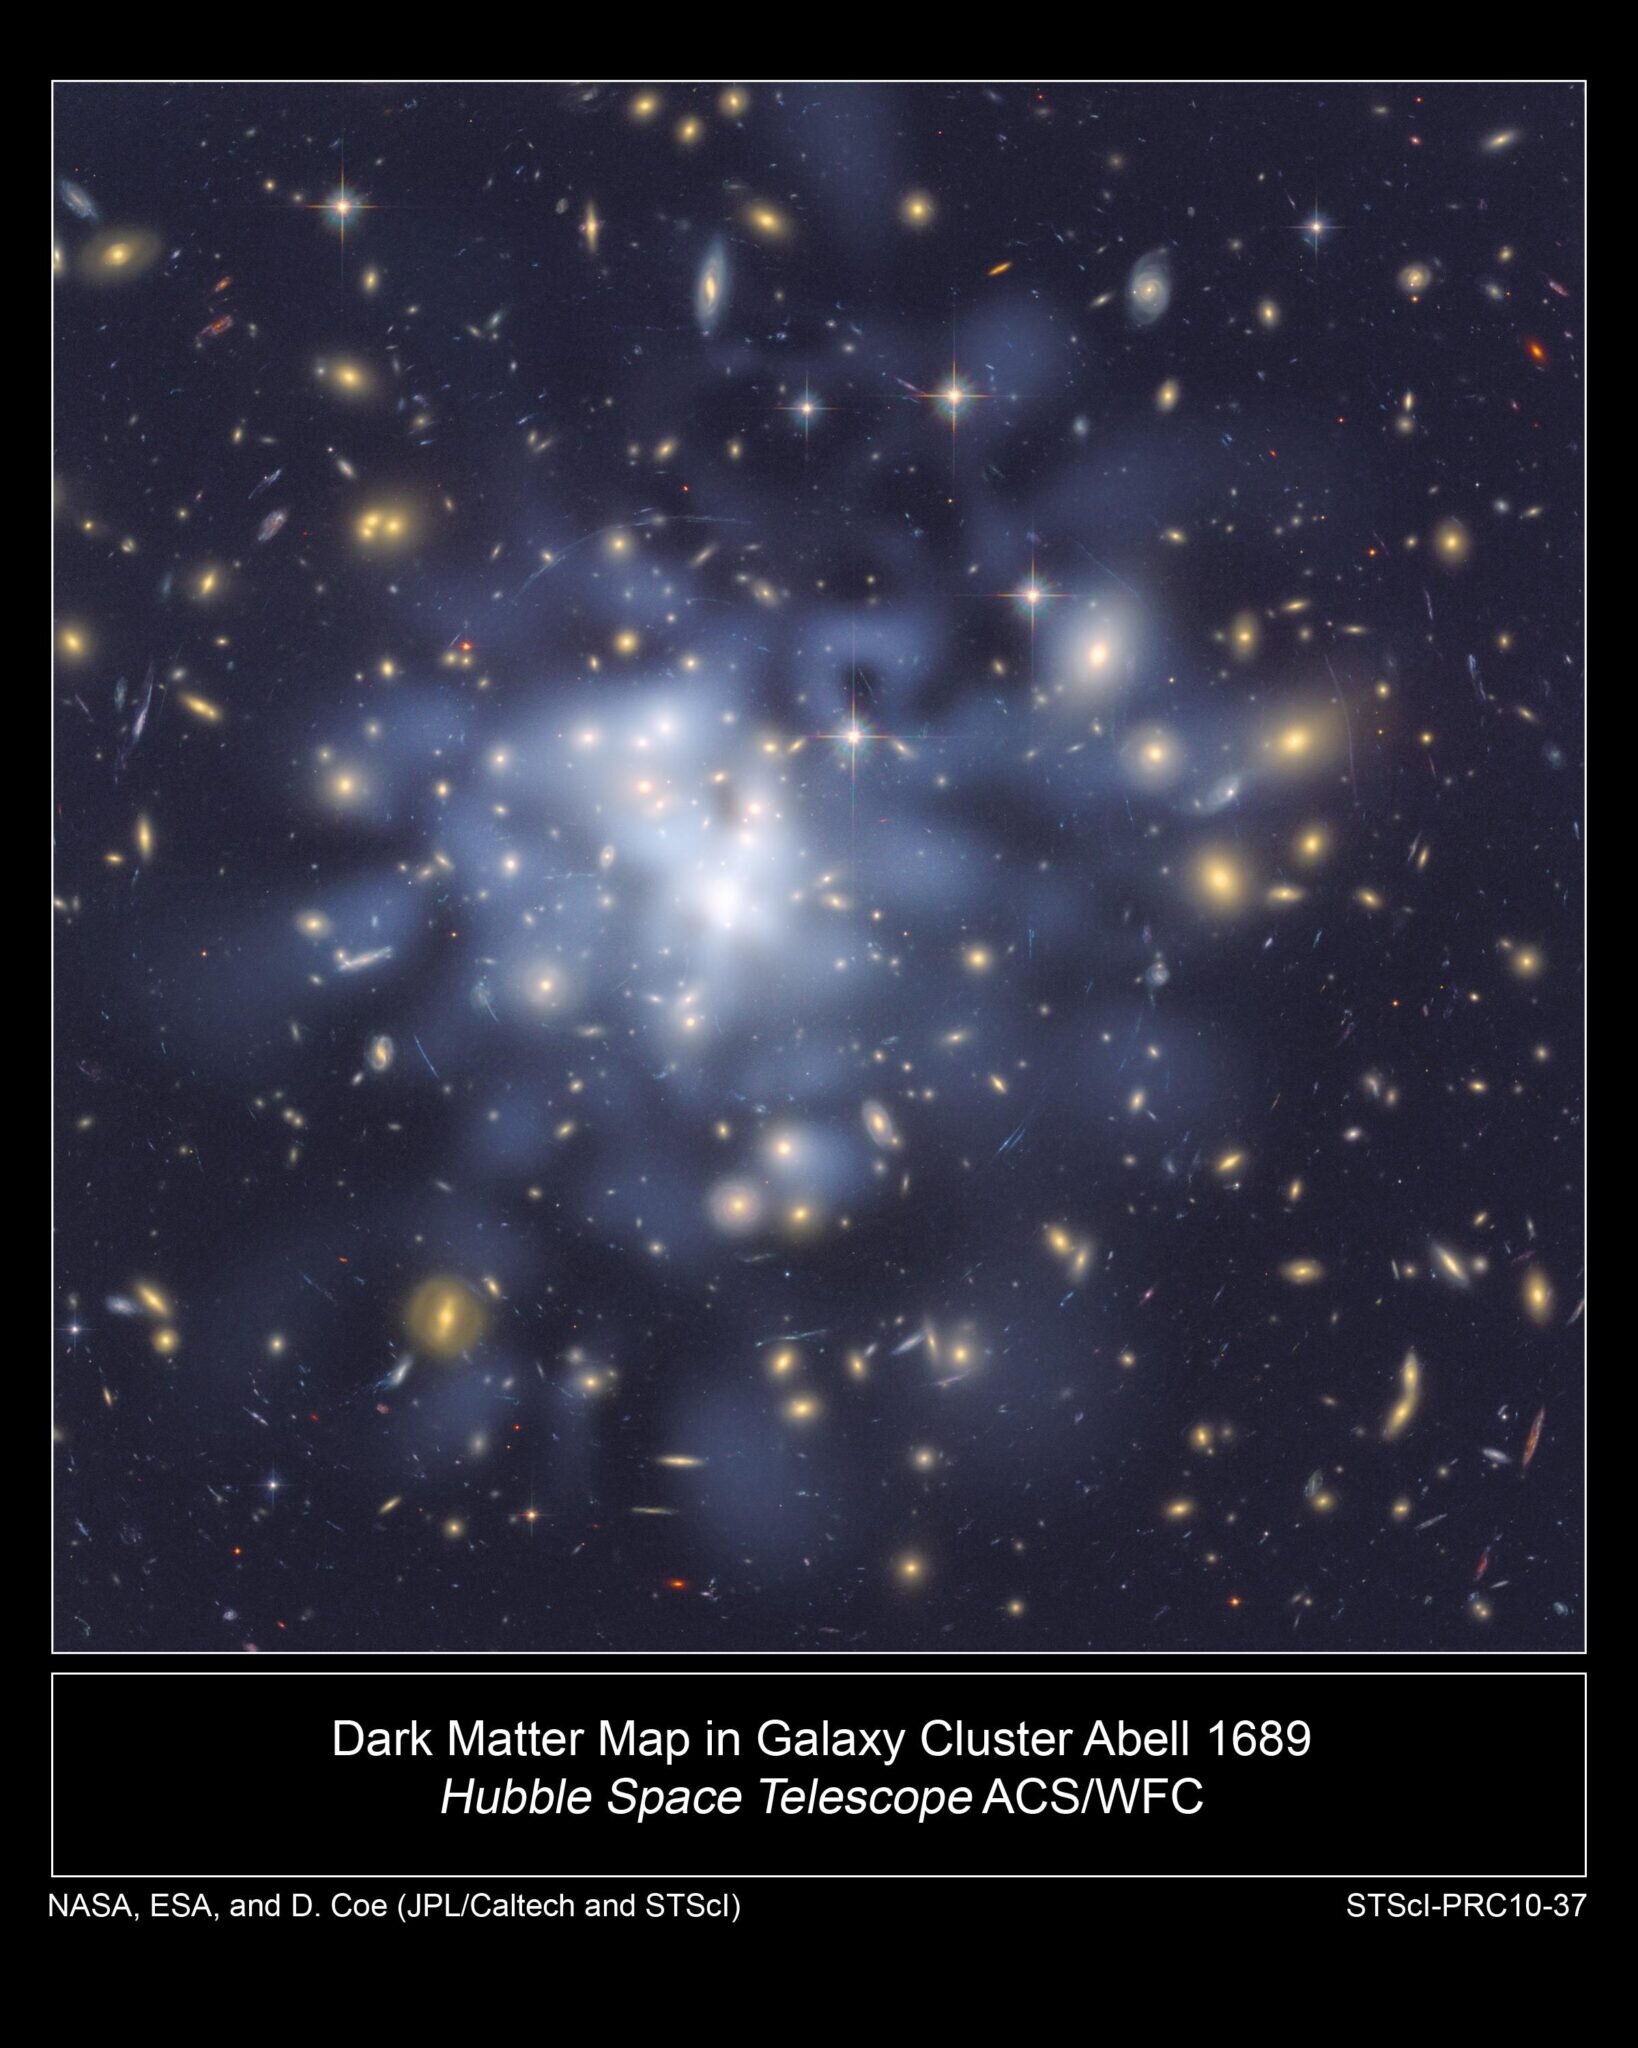 A new model for dark matter - Phys.org